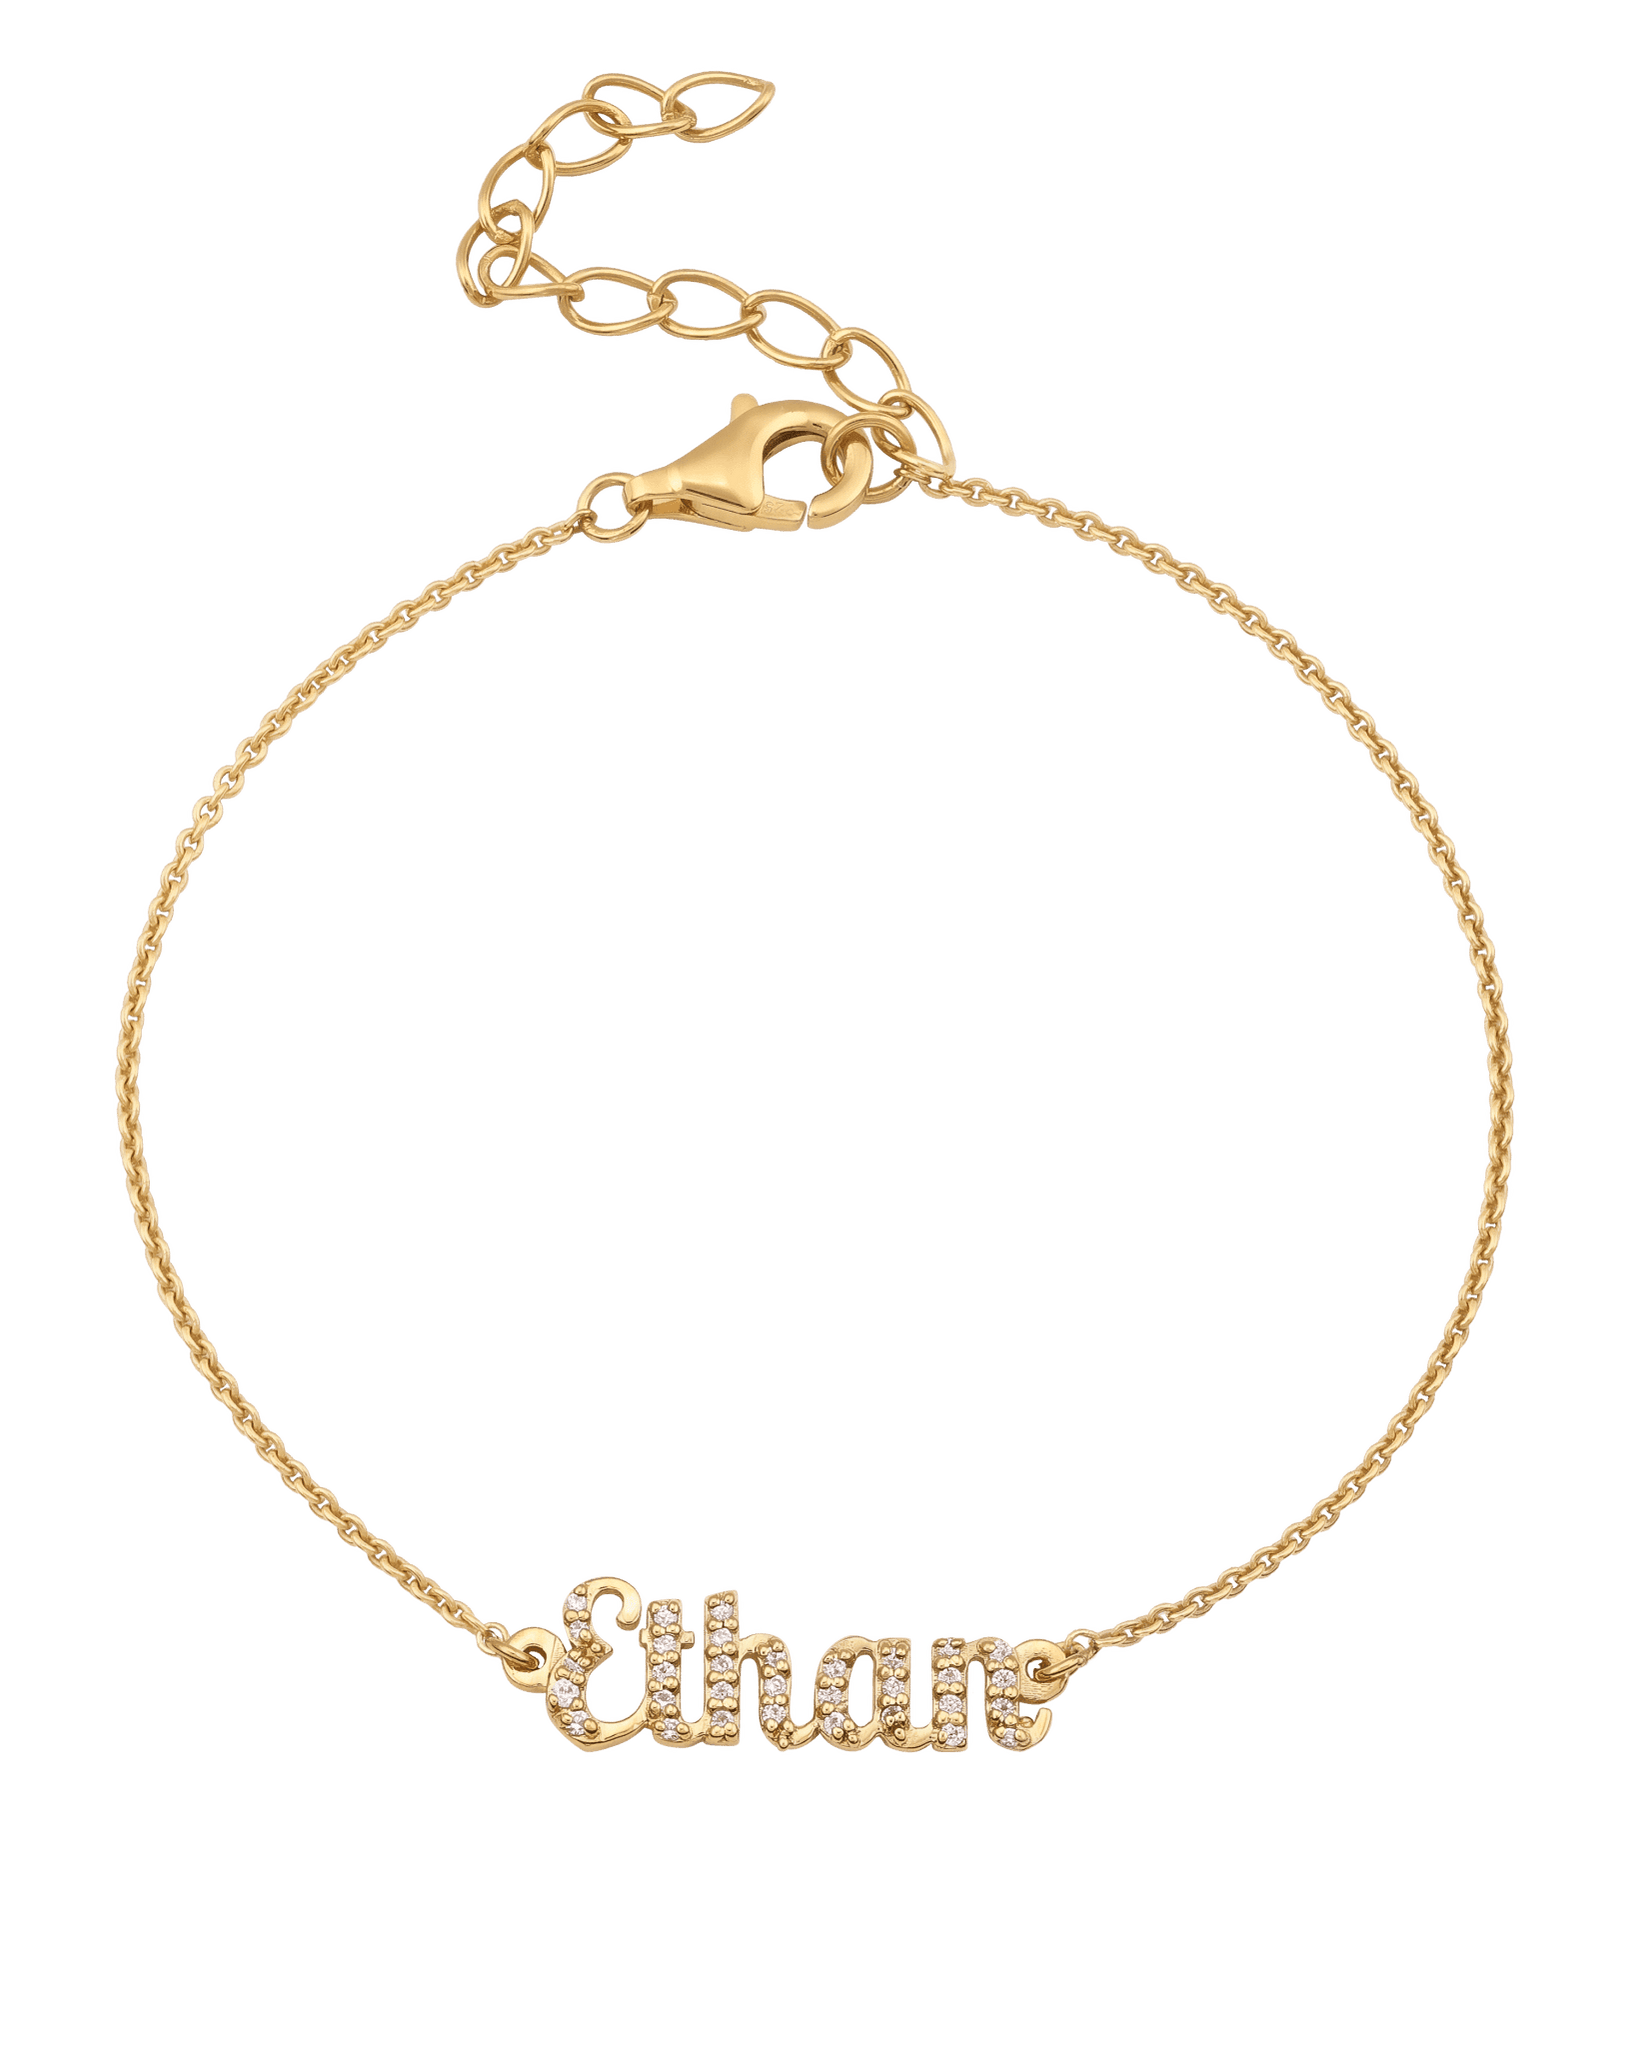 Signature Name Bracelet - 18K Gold Vermeil Bracelet magal-dev Paved w/White Sapphire 6"+1.5" Extender (S-M) 